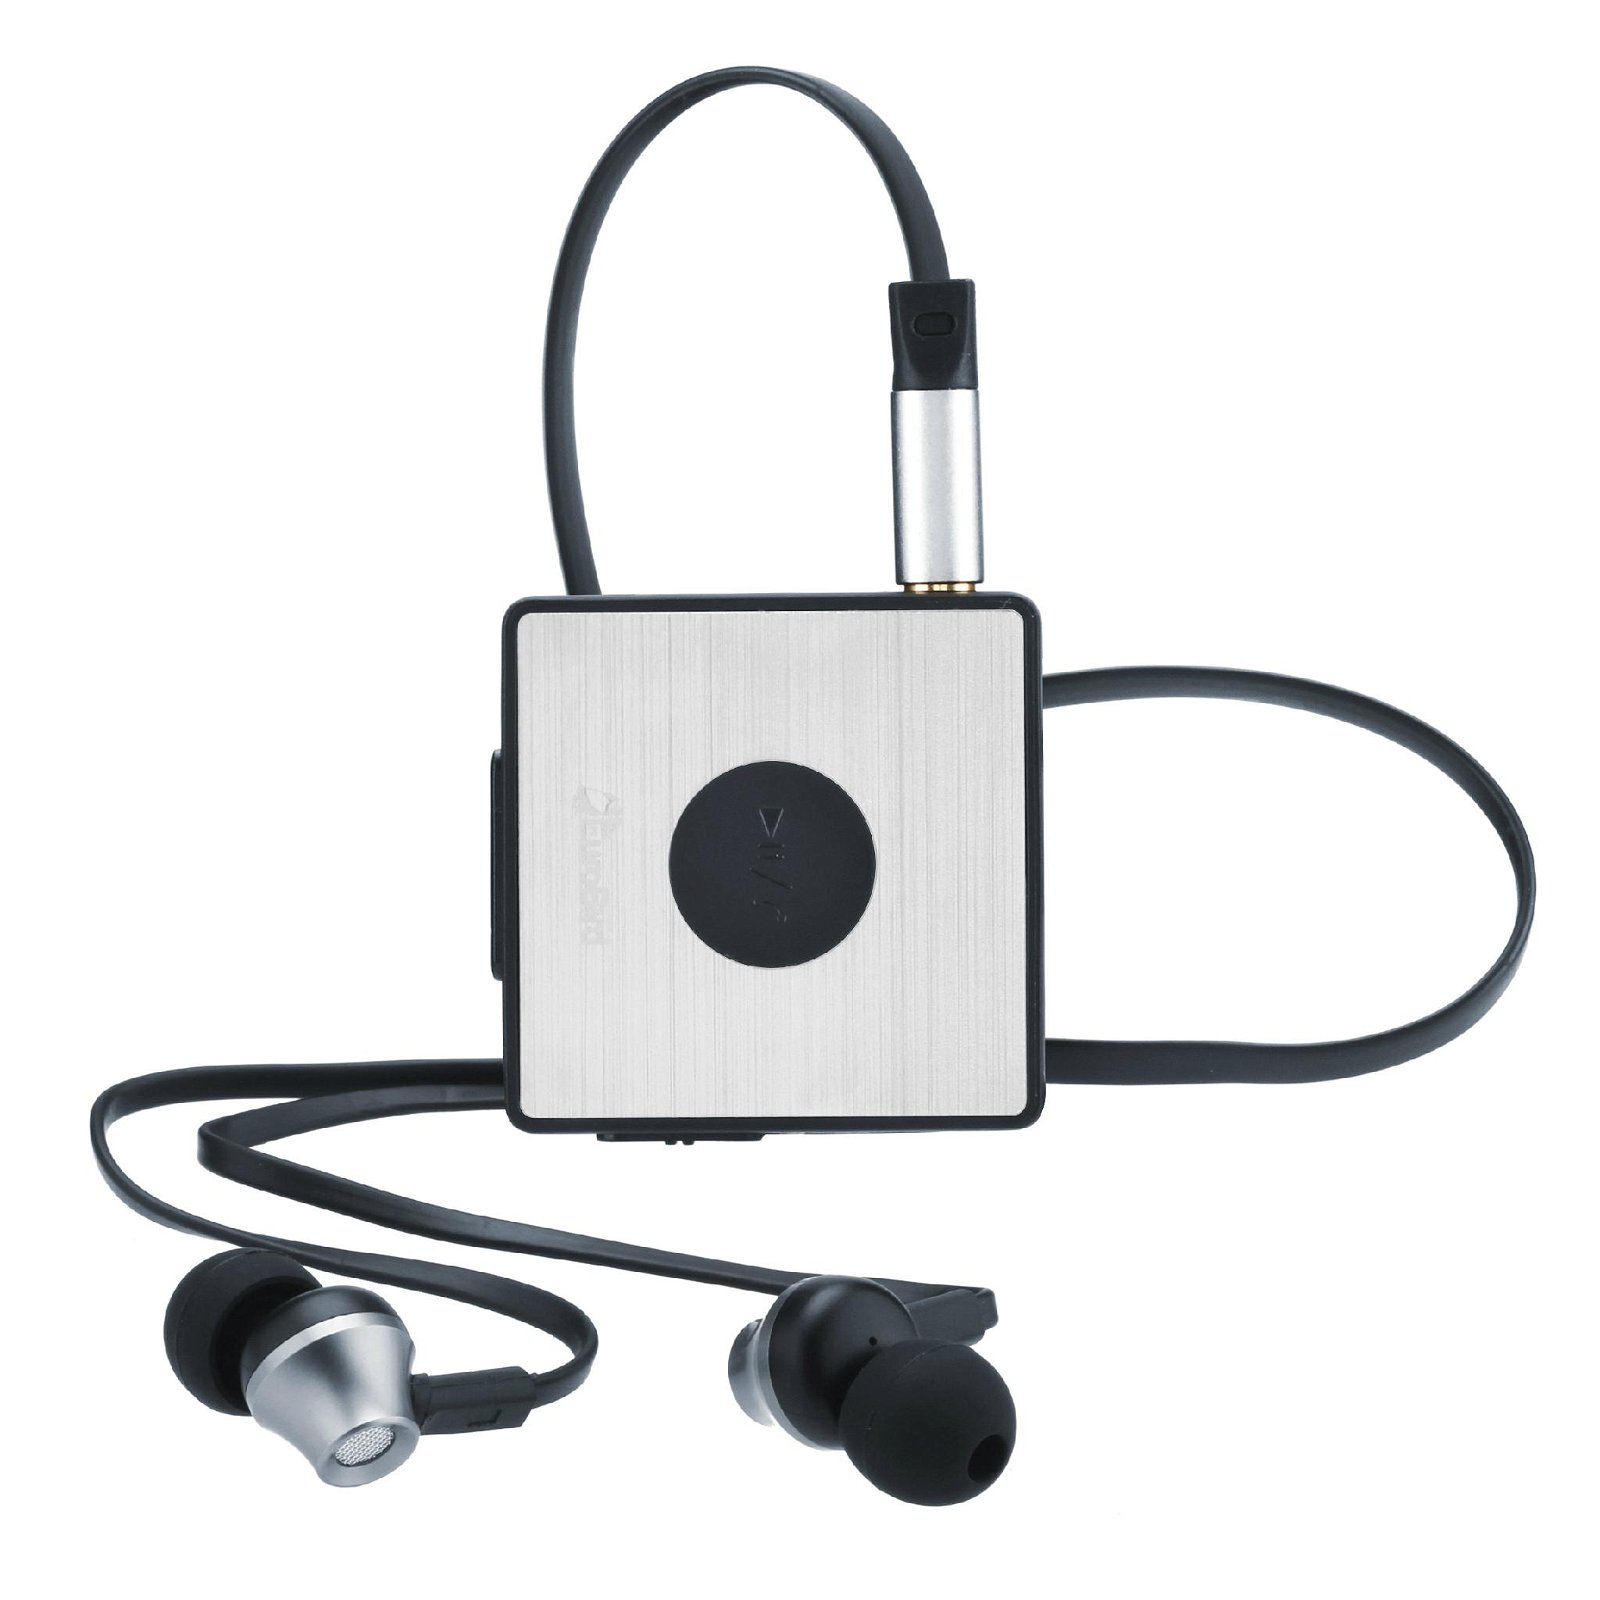 Headphones with In-Line Microphone headhones for mono